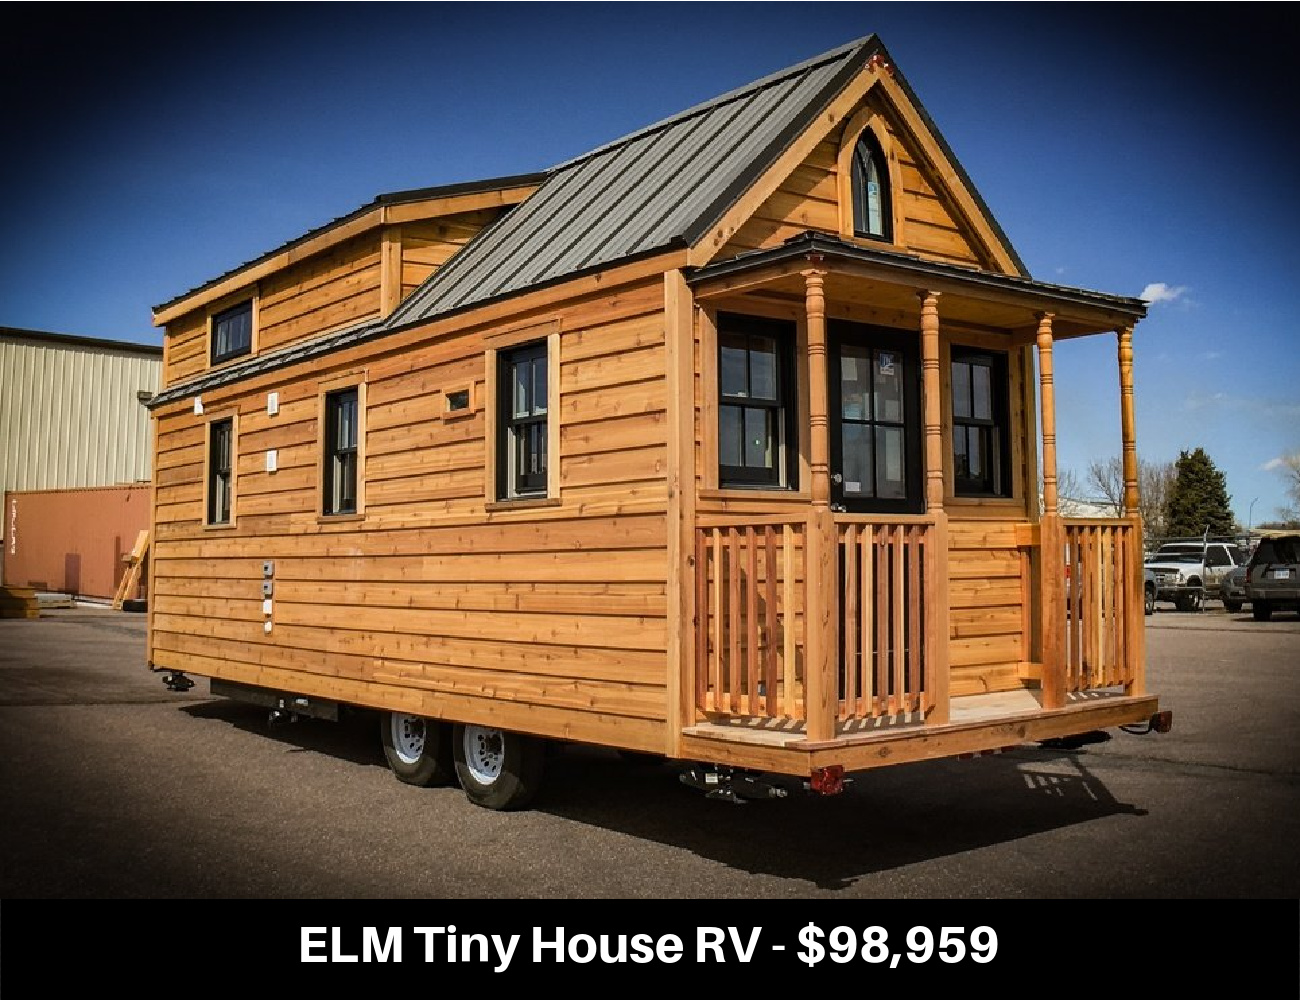 ELM Tiny House RV - $98,959